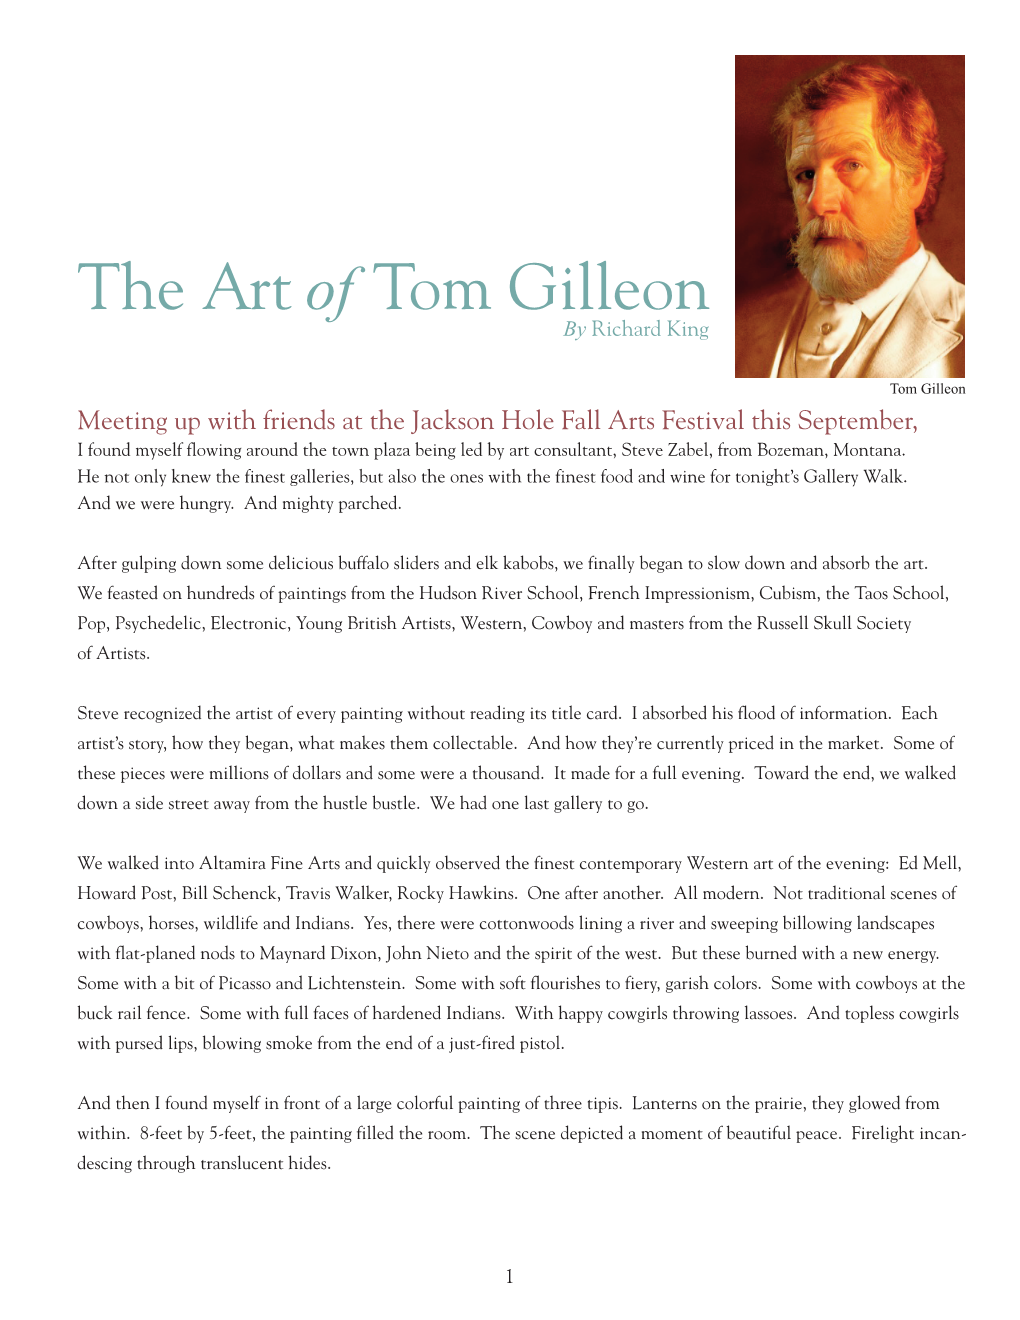 The Art of Tom Gilleon